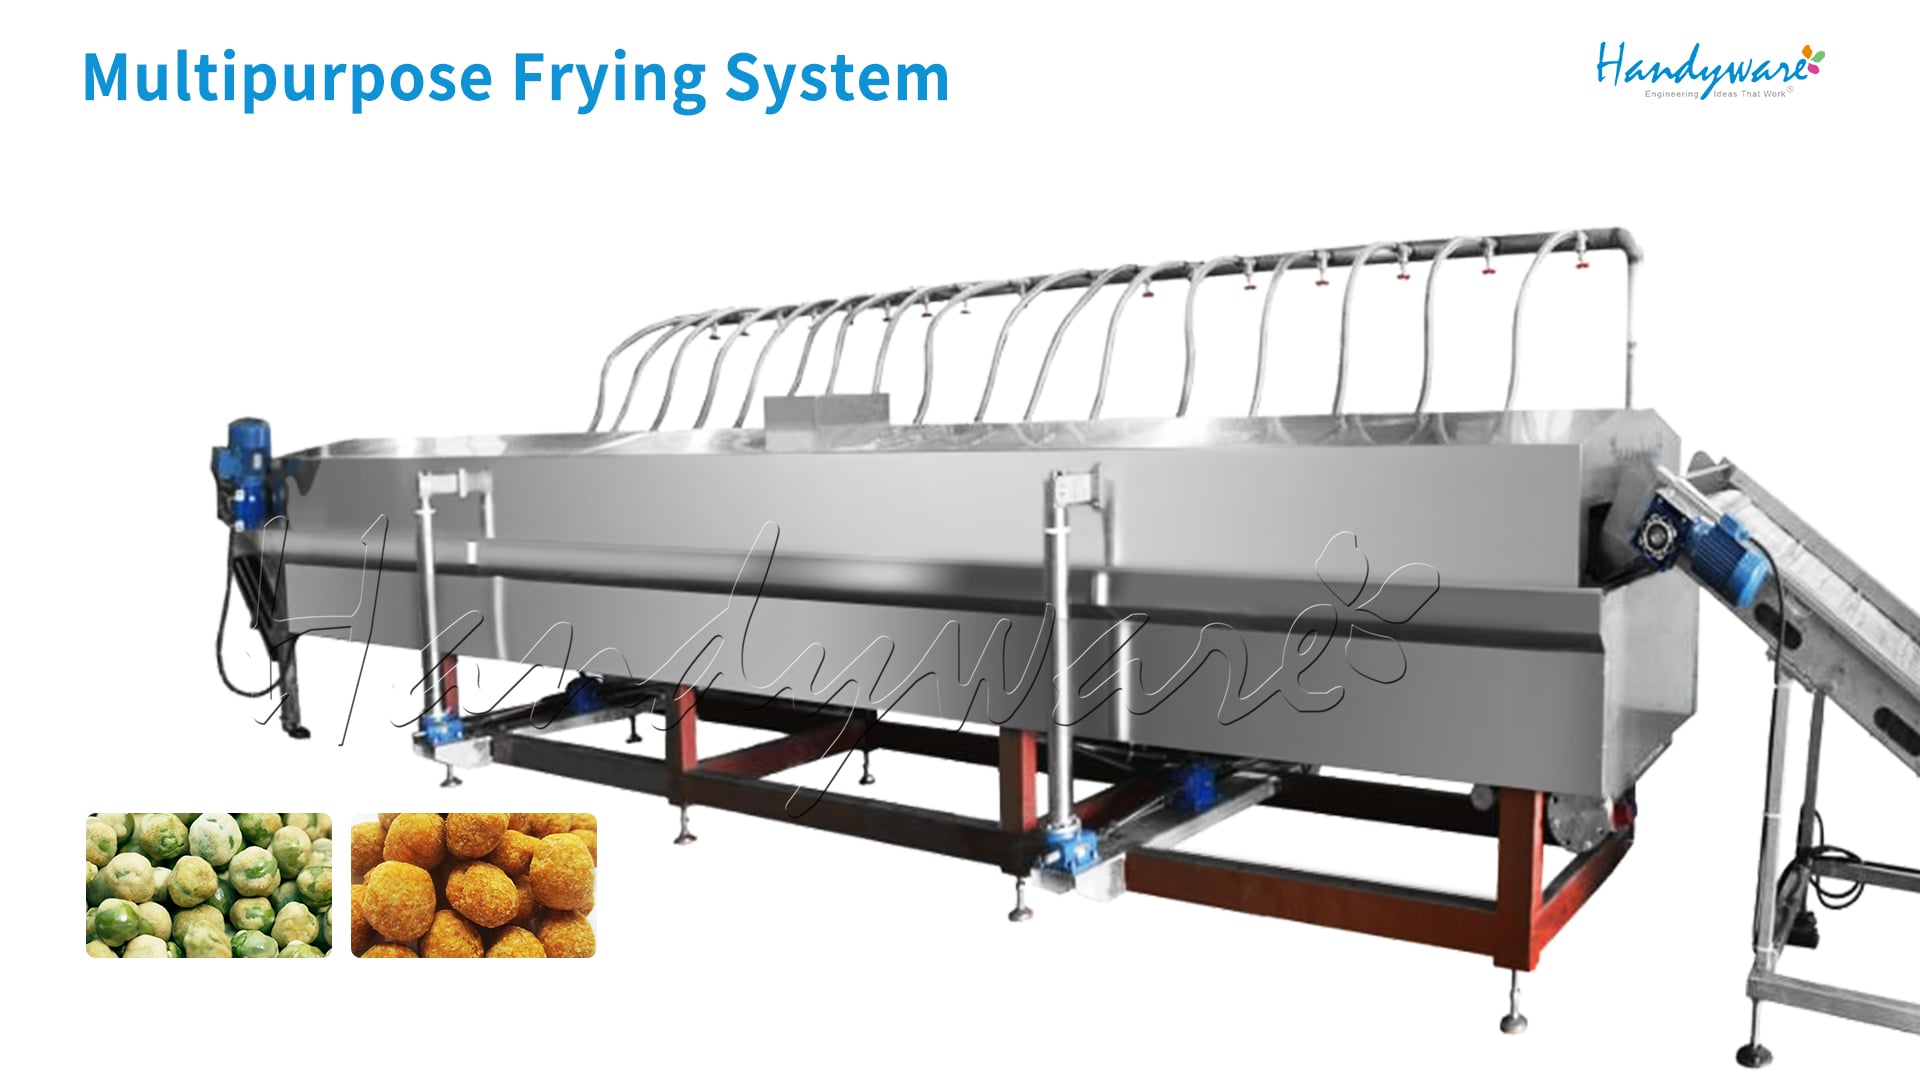 Multipurpose Frying System